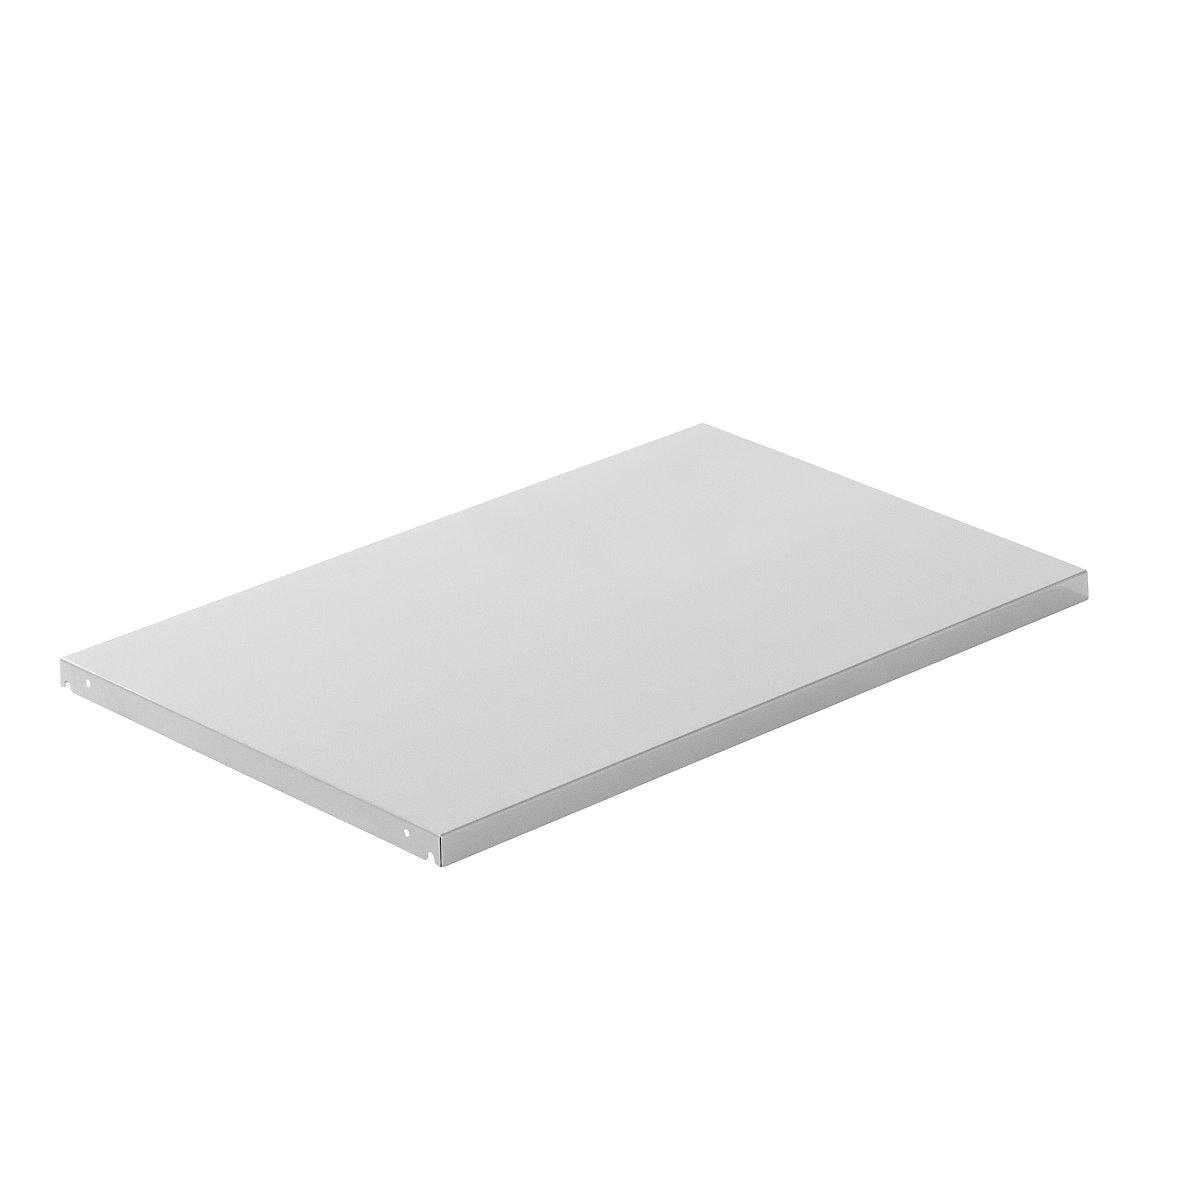 Sheet steel top shelf – LISTA, WxD 1290 x 860 mm, max. shelf load 200 kg, light grey